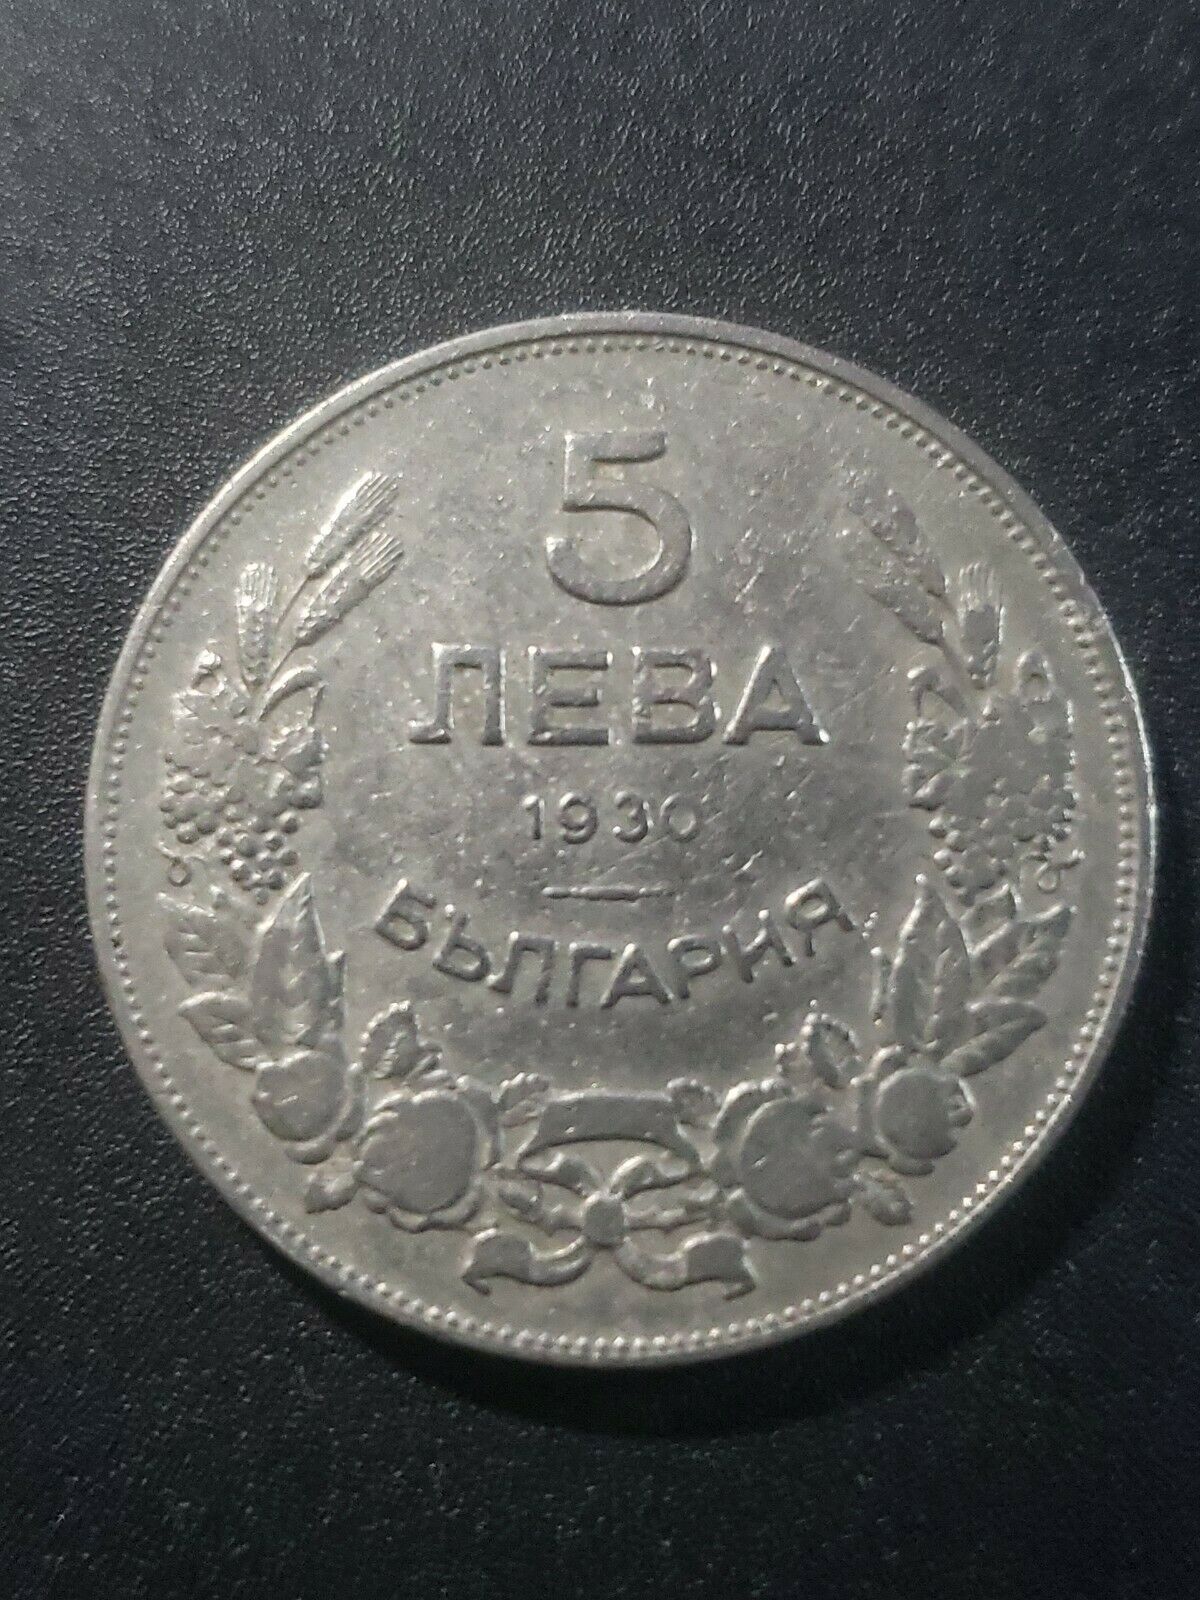 Bulgaria 1930  Boris Iii  5  Leva  Copper-nickel  26.13mm  Circulated  Coin...